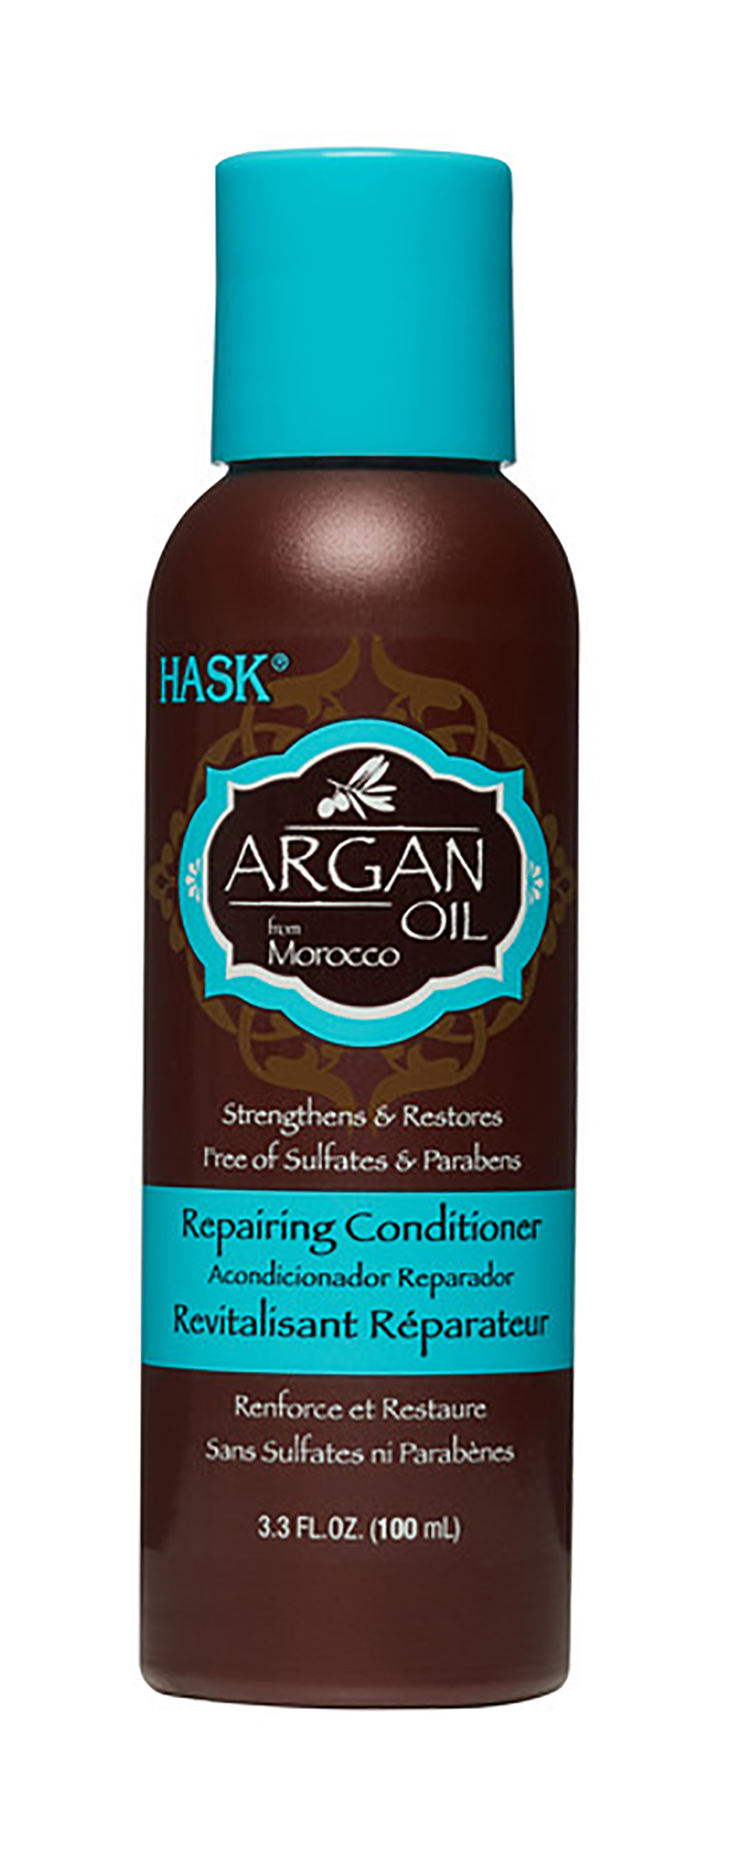 Кондиционер для волос Hask Argan Oil Repairing Conditioner Travel Size 100 мл прогулочная бутылка для животных petkit eversweet travel s s400 p4230 белая 400 мл